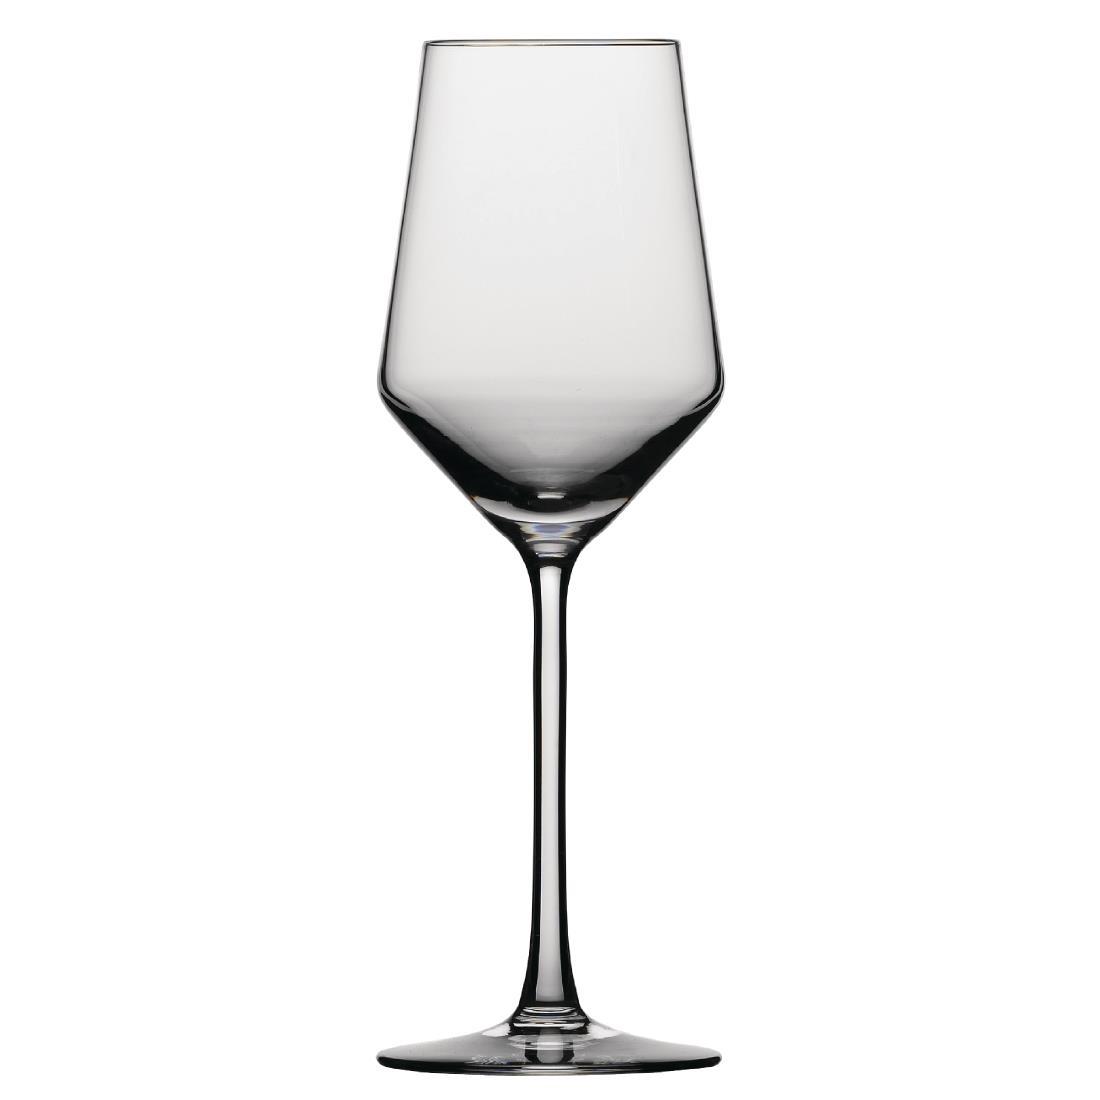 Schott Zwiesel Belfesta Crystal White Wine Glasses 300ml (Pack of 6) - GD902  - 1